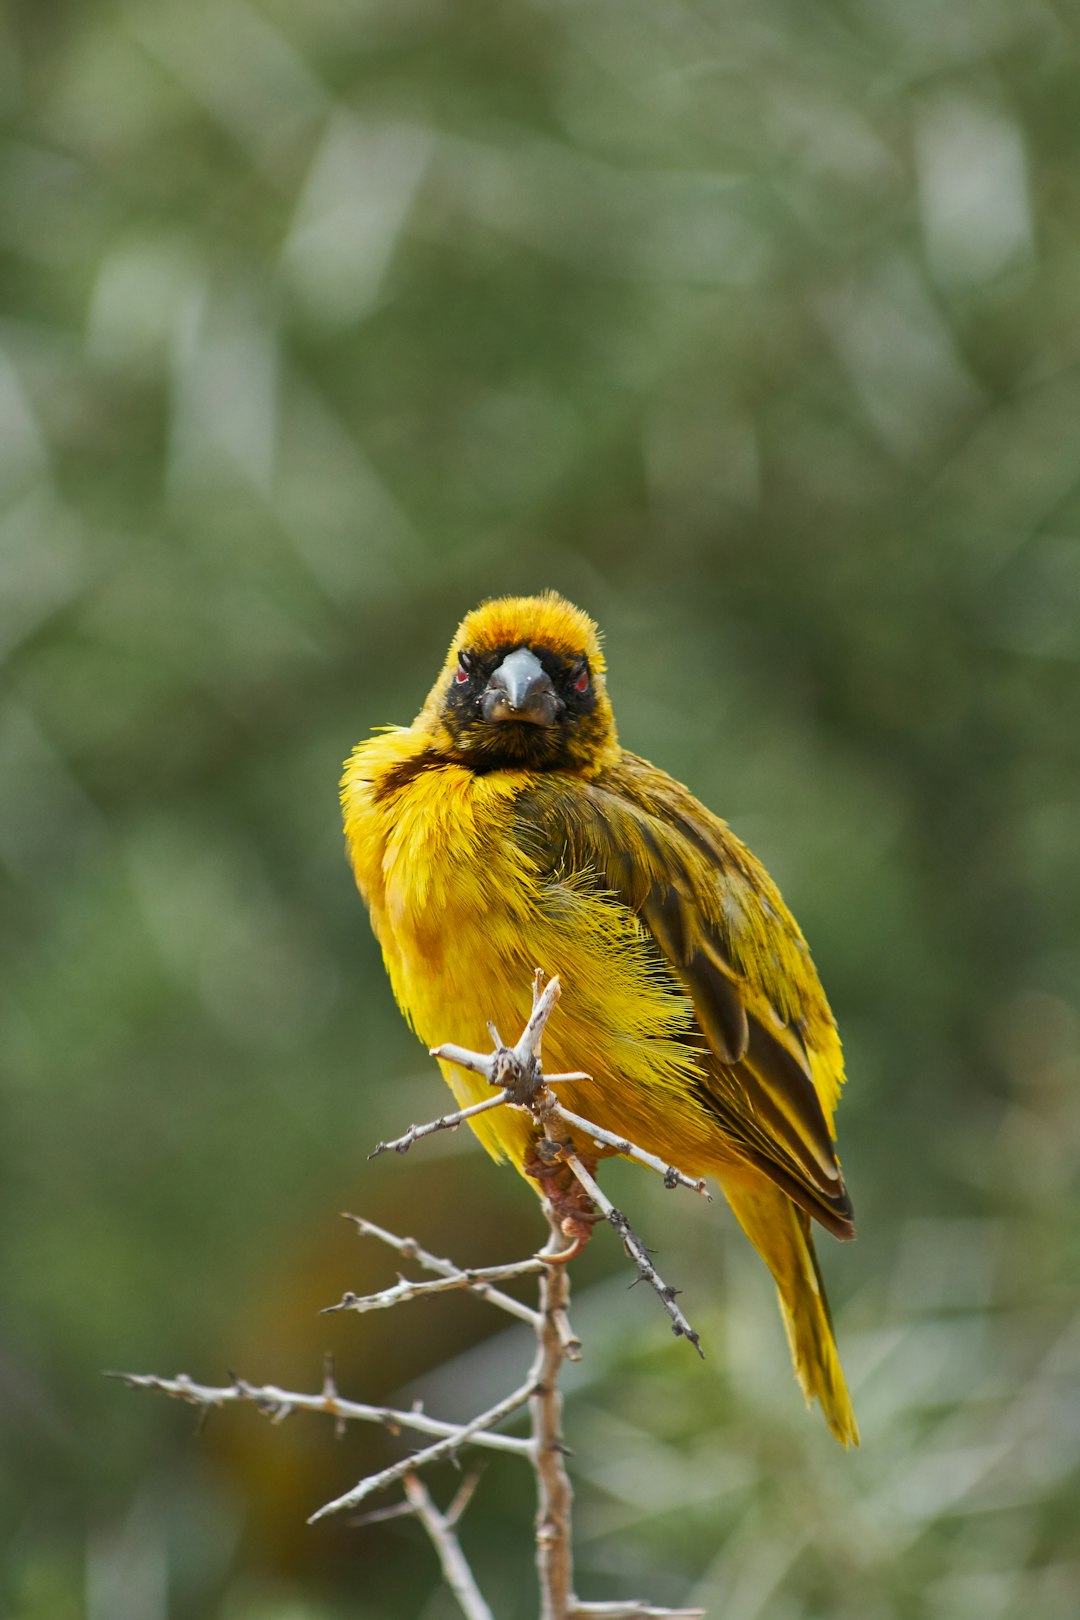 yellow and black coated bird